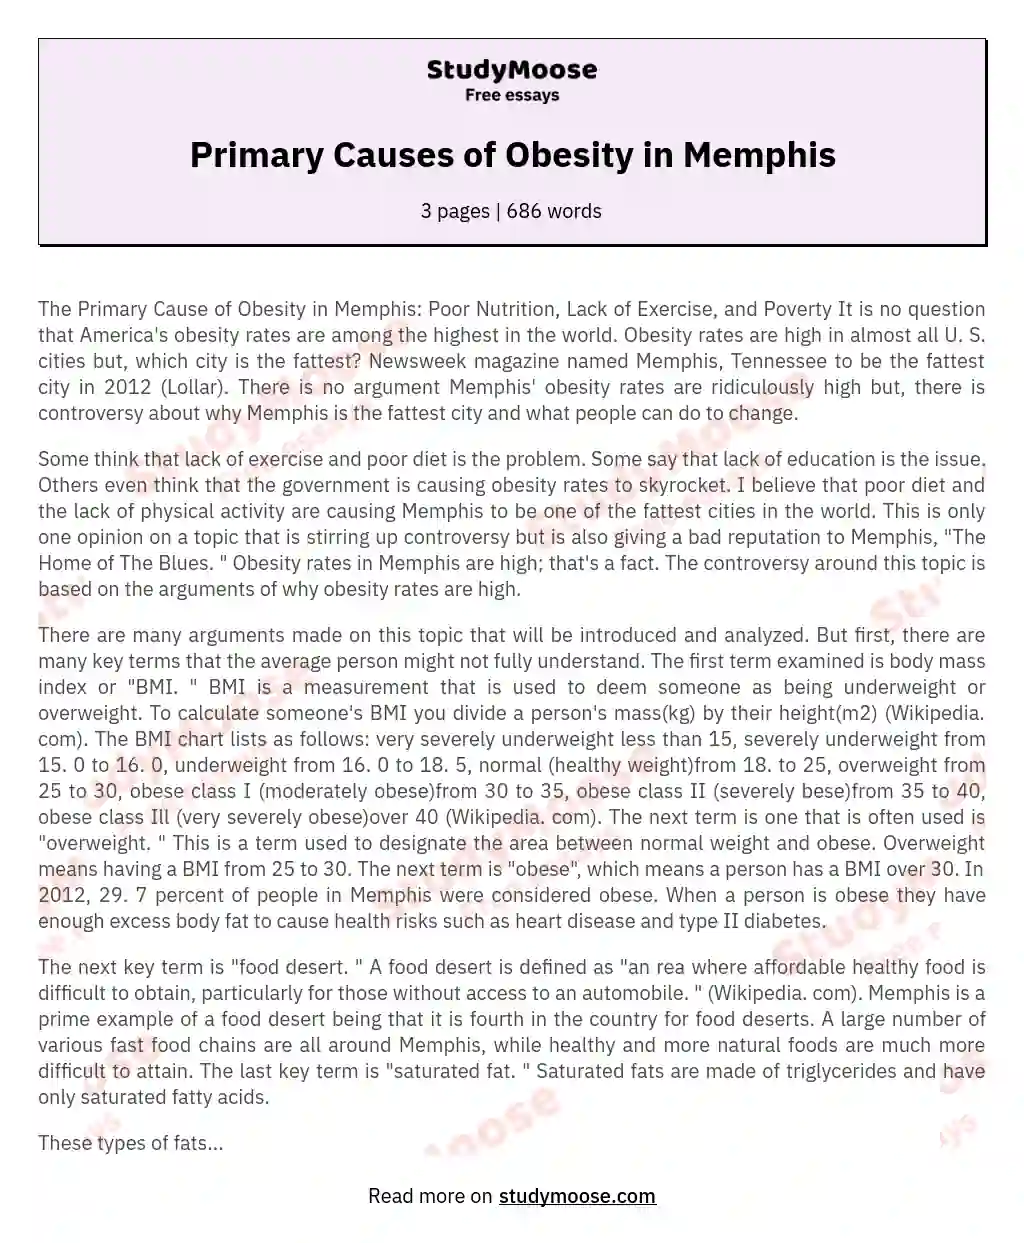 Primary Causes of Obesity in Memphis essay